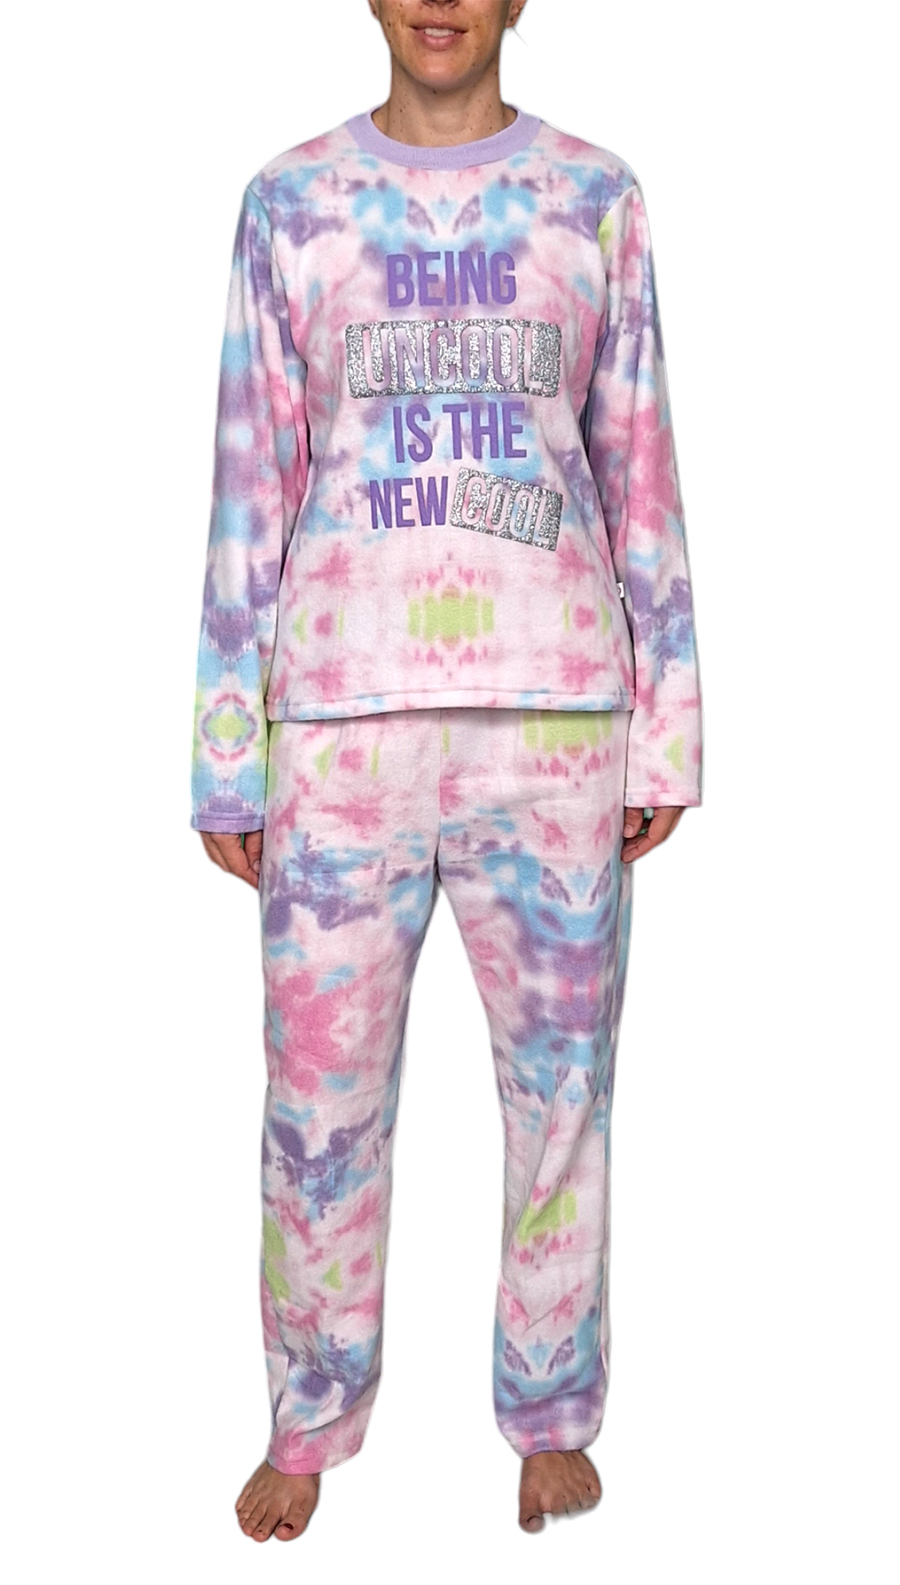 pijama-multicolor-polar-manga-larga-pantalon-lazy-lola-3398